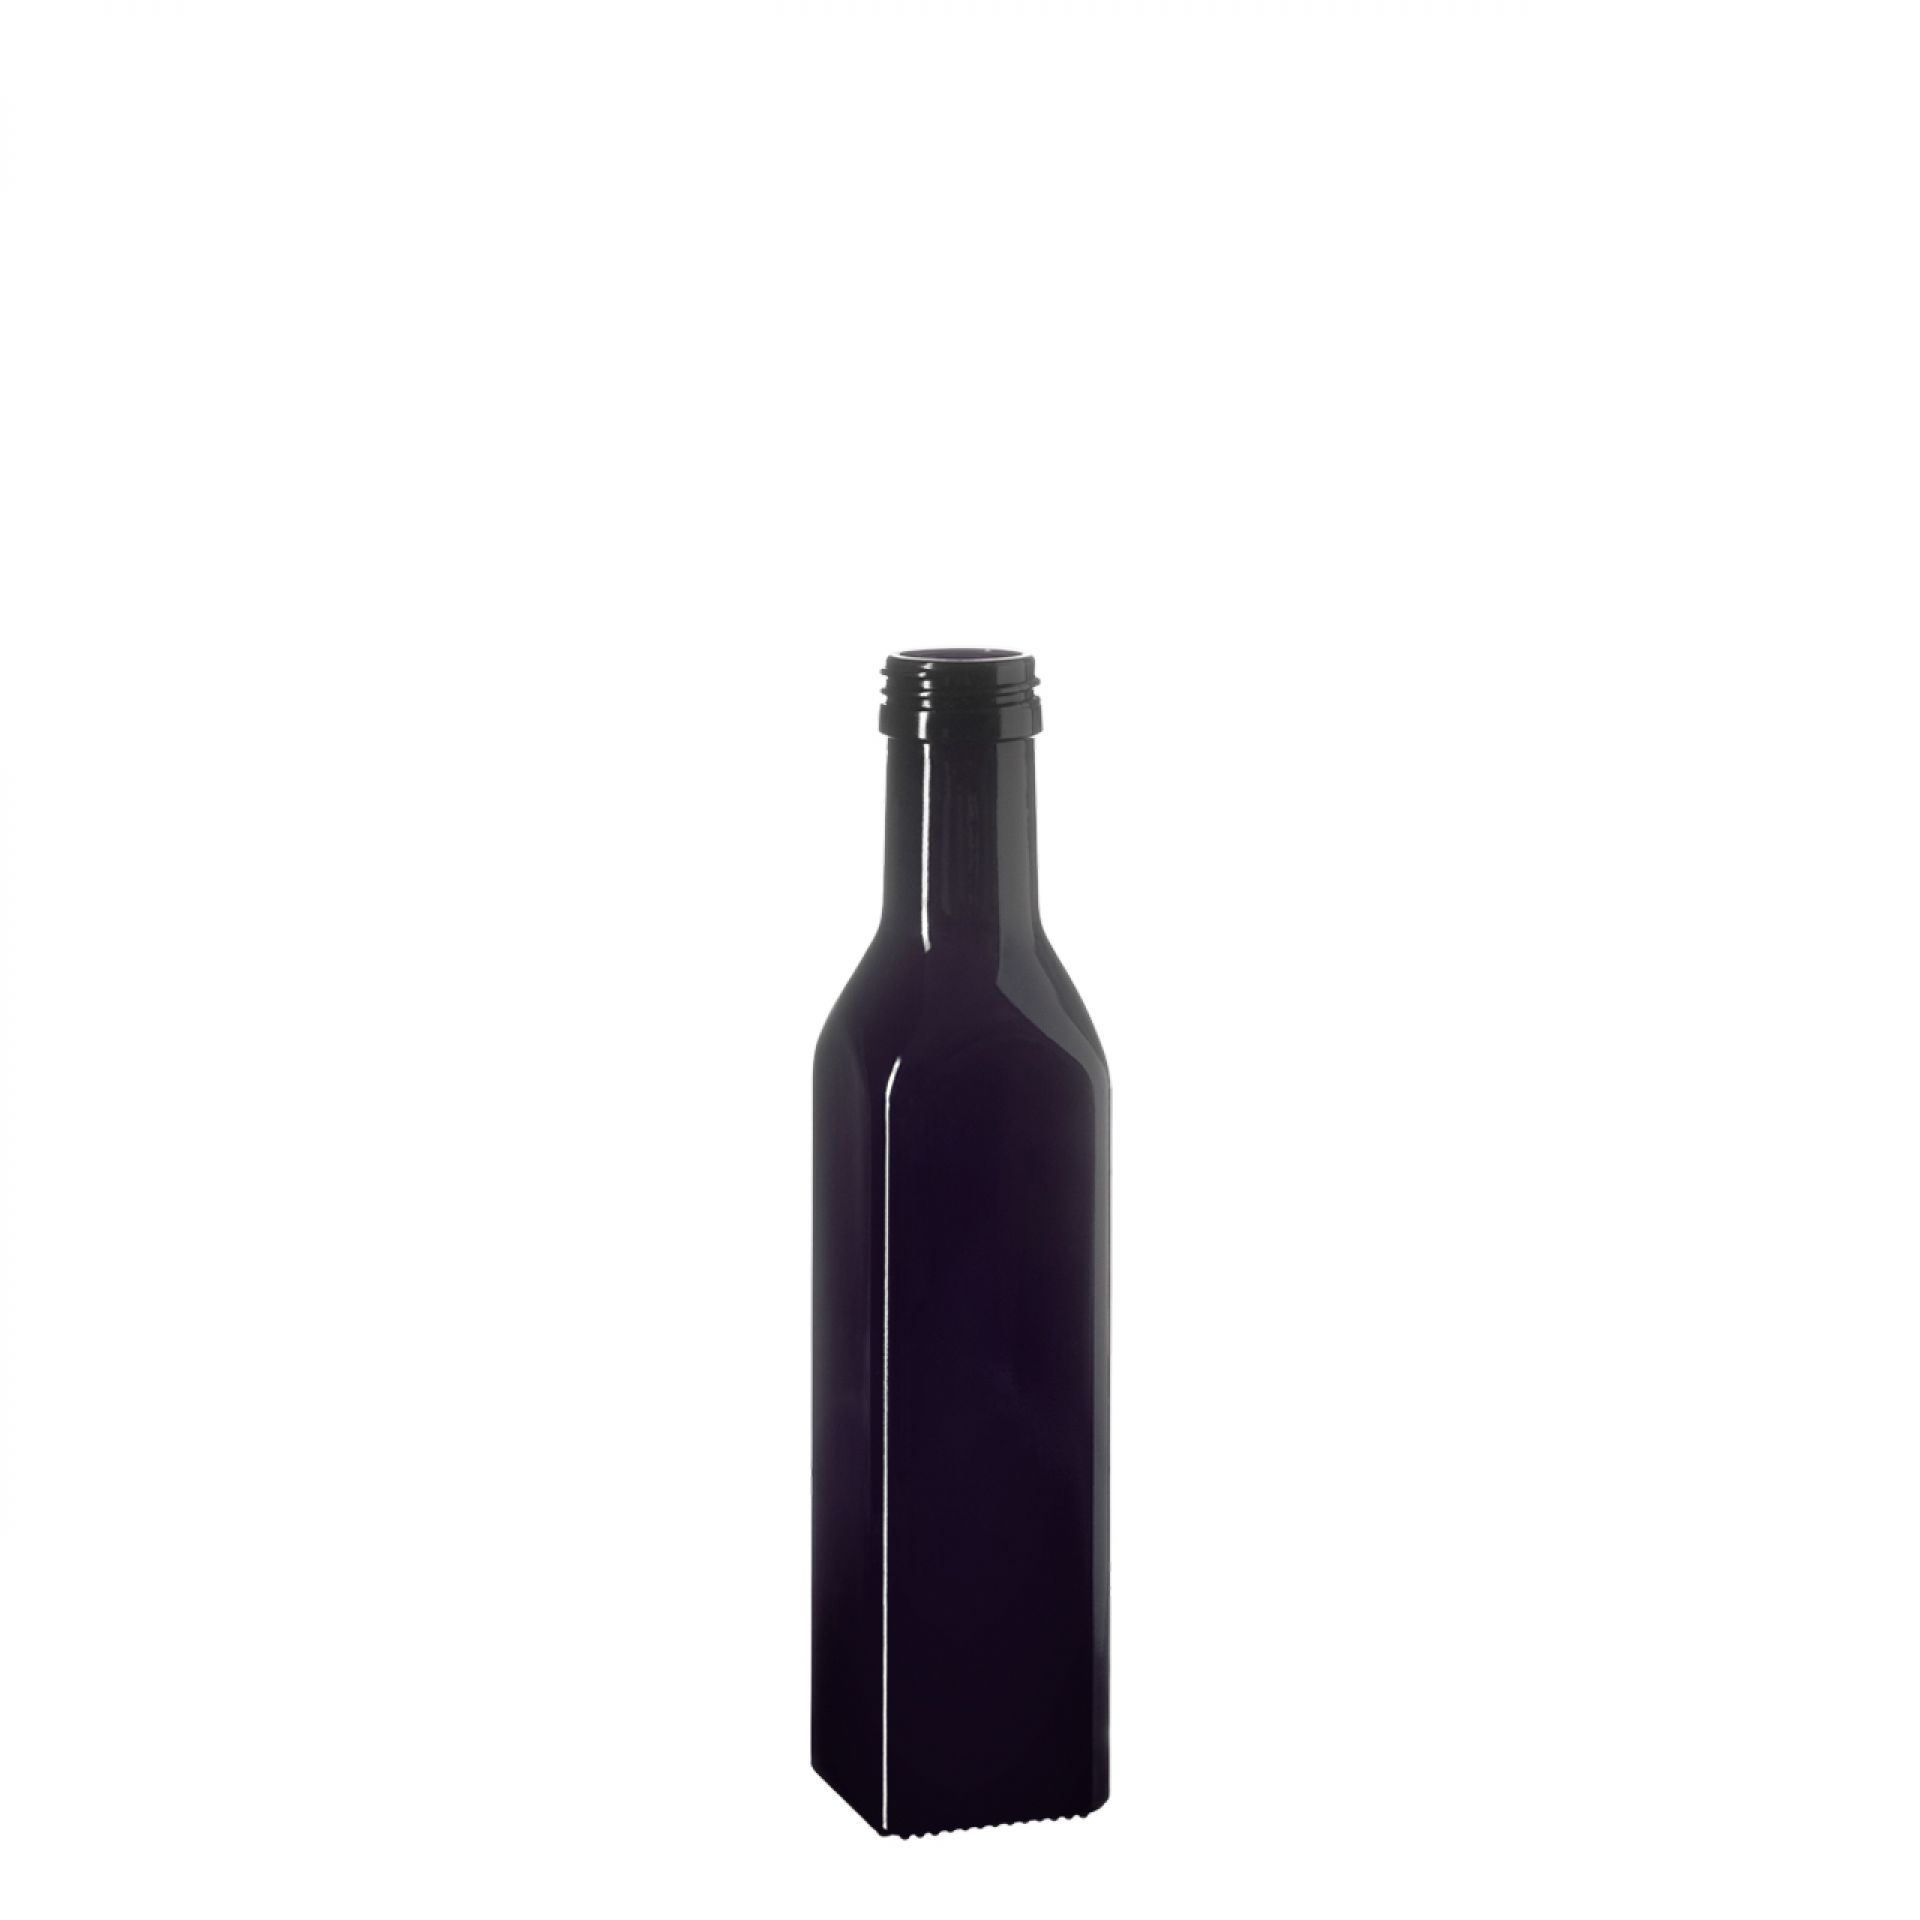 Oil bottle Castor 250ml, 31.5 STD thread, square, Miron